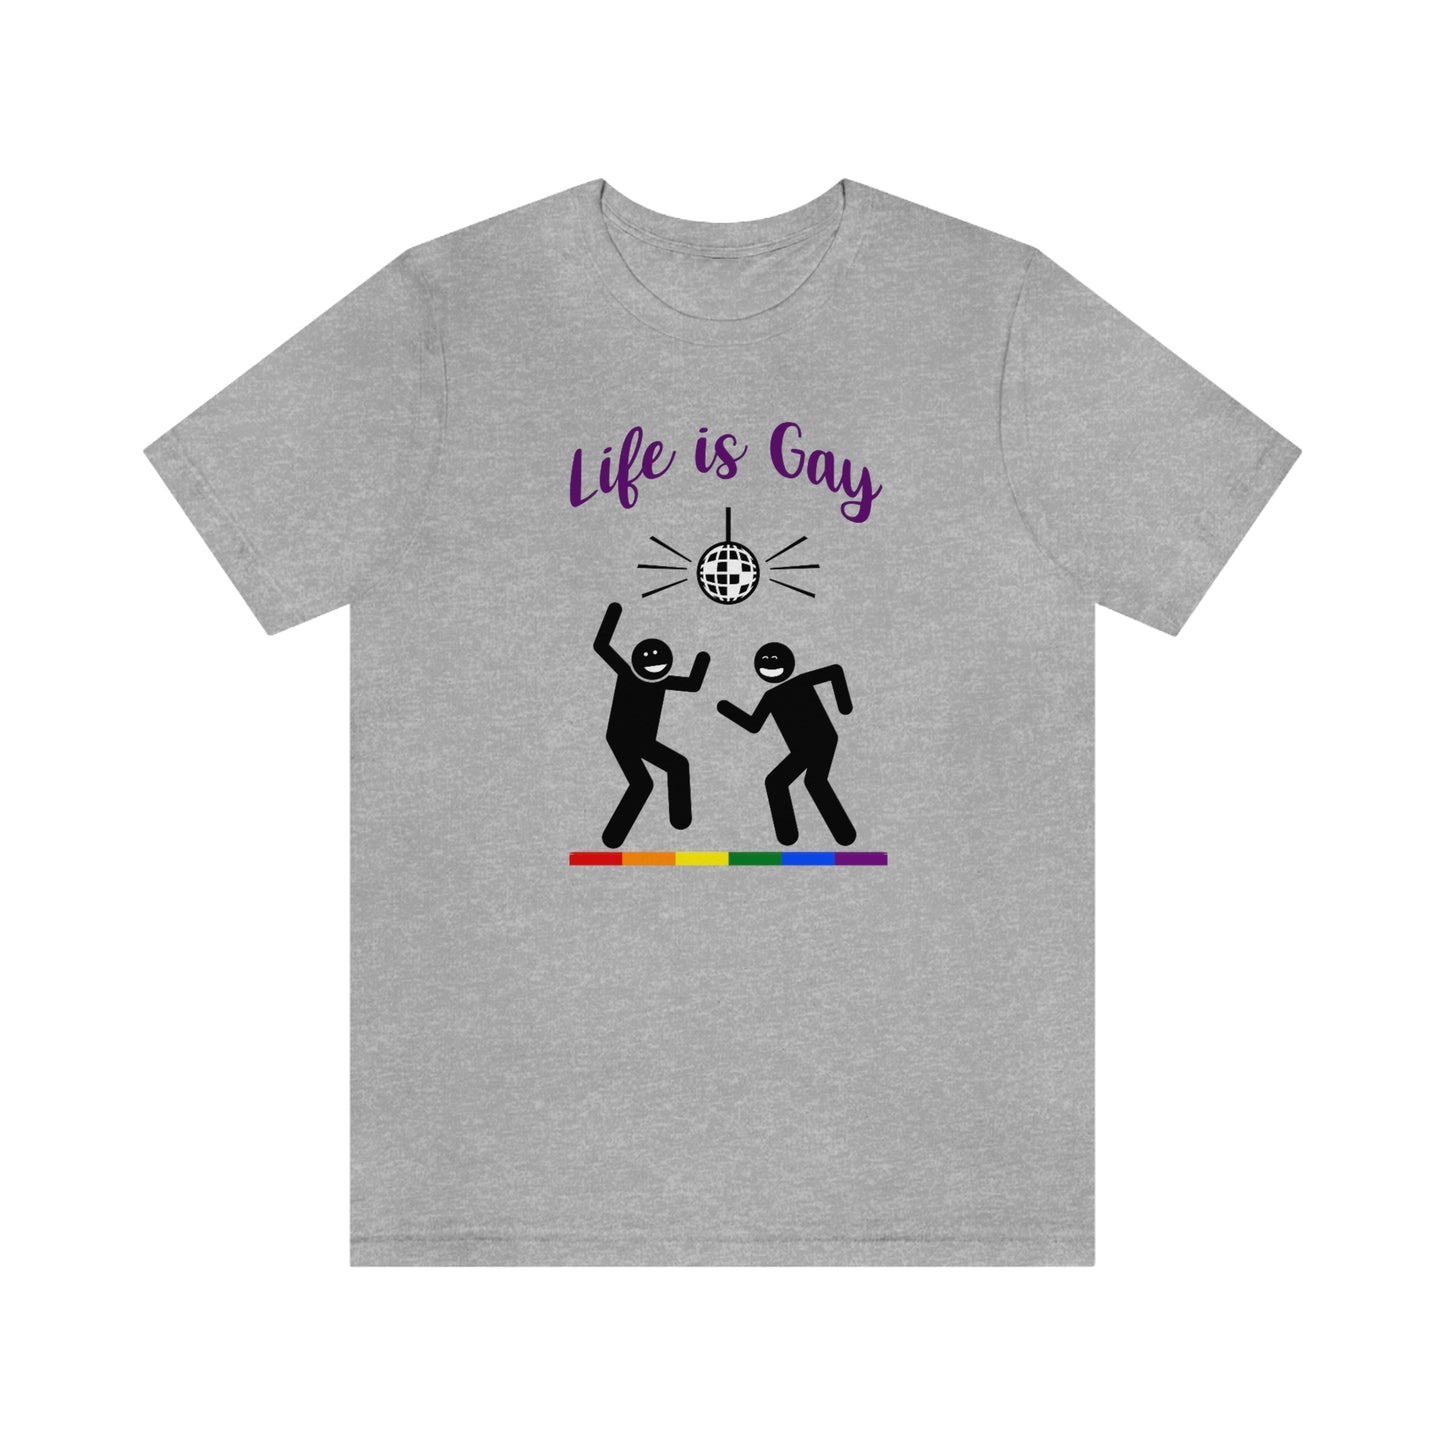 Life is Gay - Camiseta unisex para adultos disco